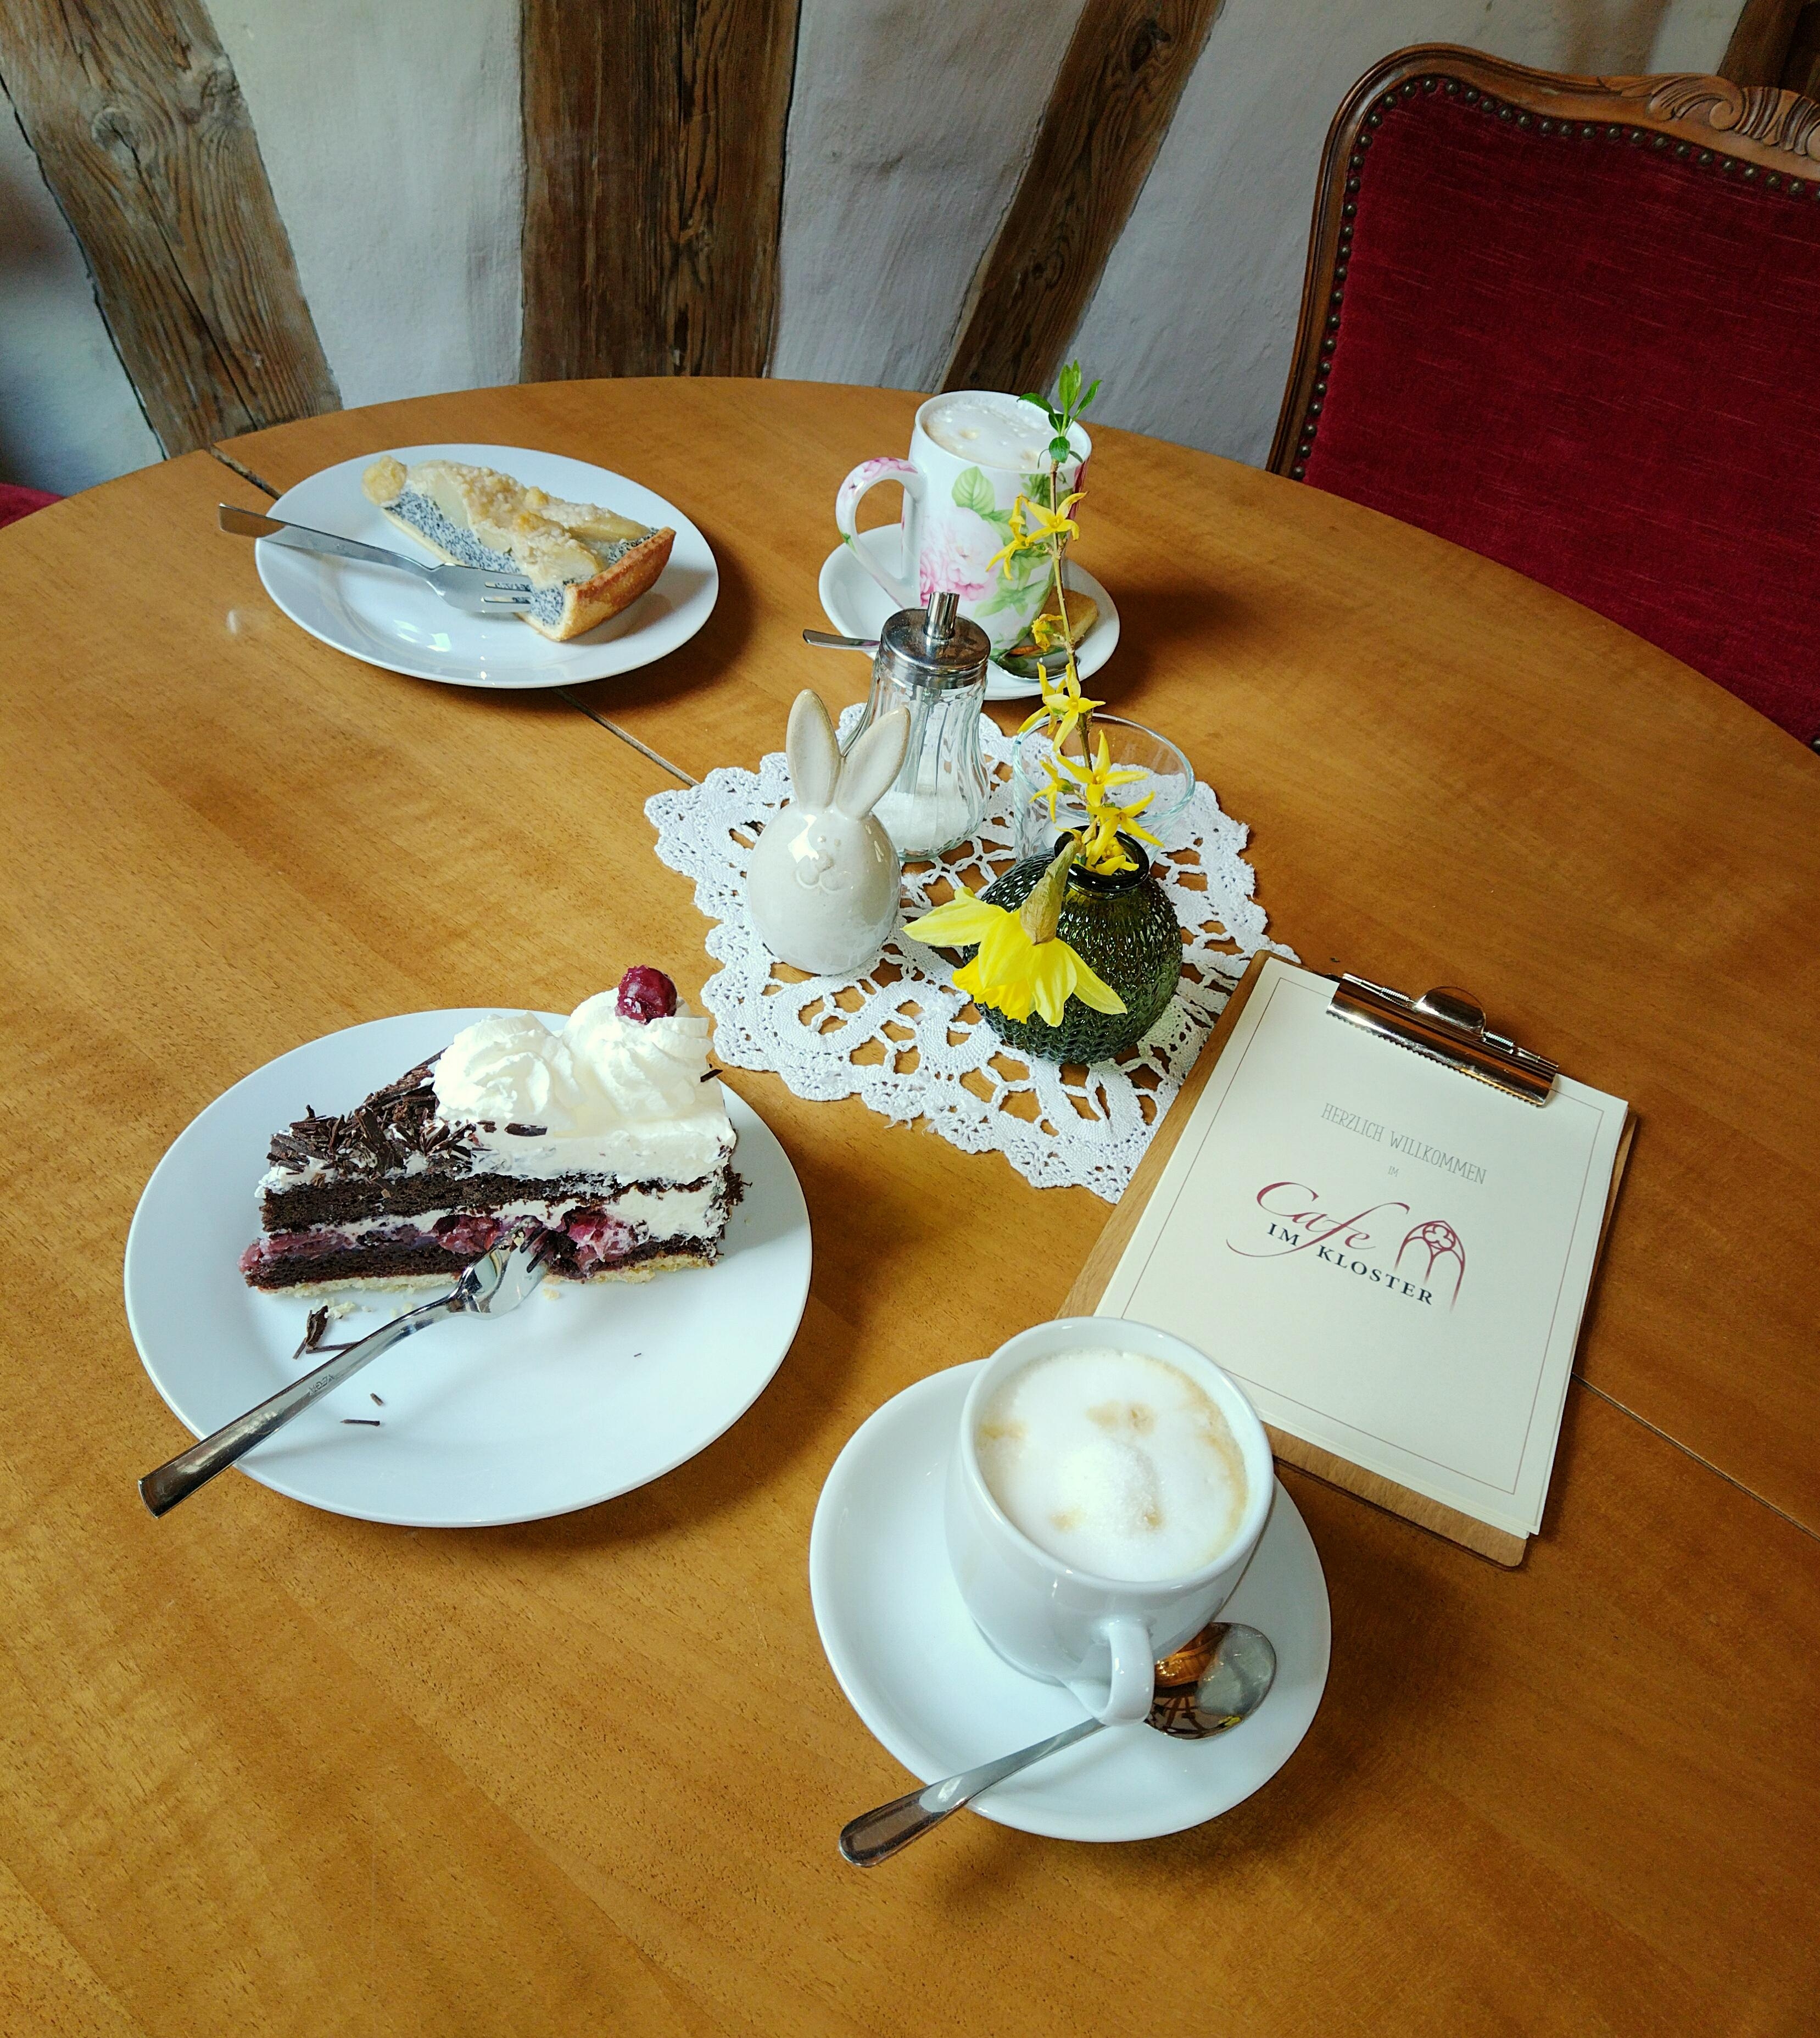 Café im Kloster Hirsau
#café #kuchen #lecker #klostercafé #hirsau